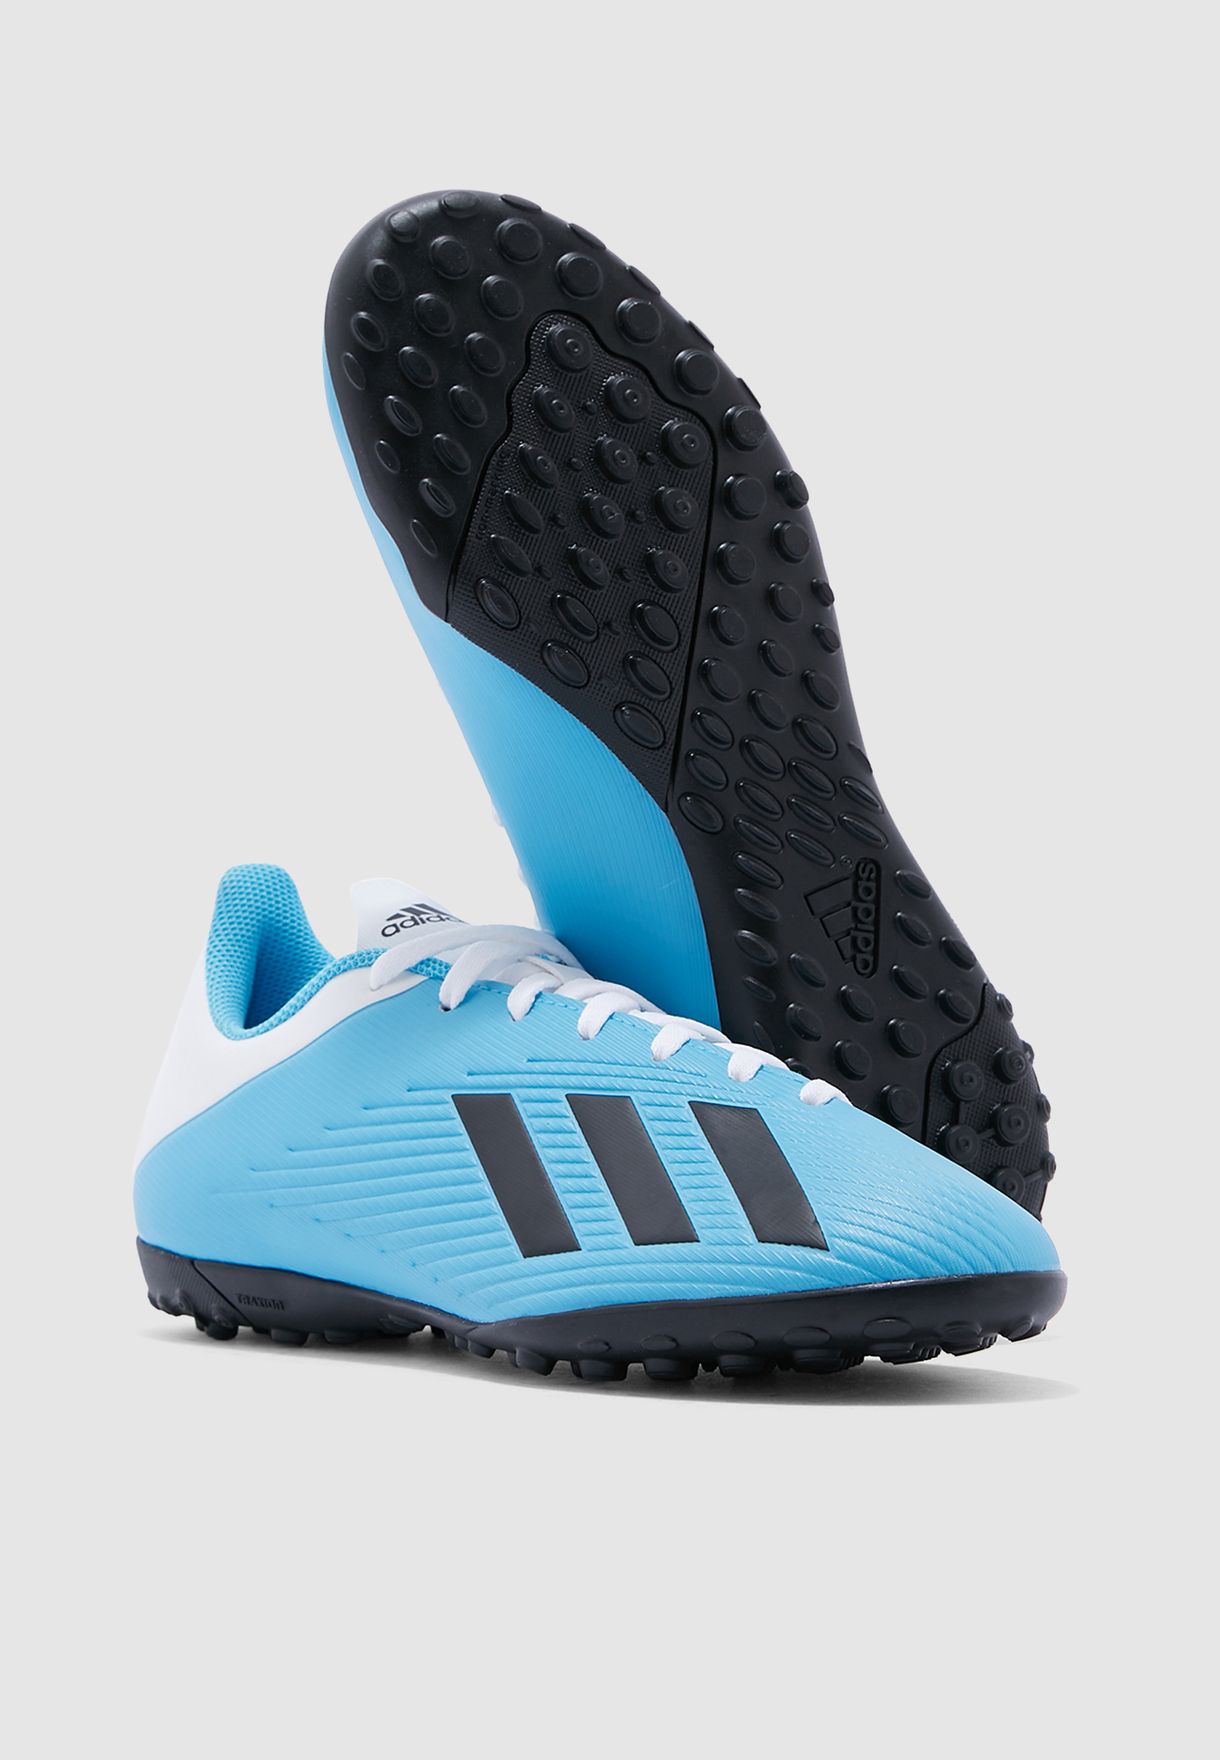 Sandalias volumen Brillar Buy adidas blue X 19.4 TF for Men in MENA, Worldwide